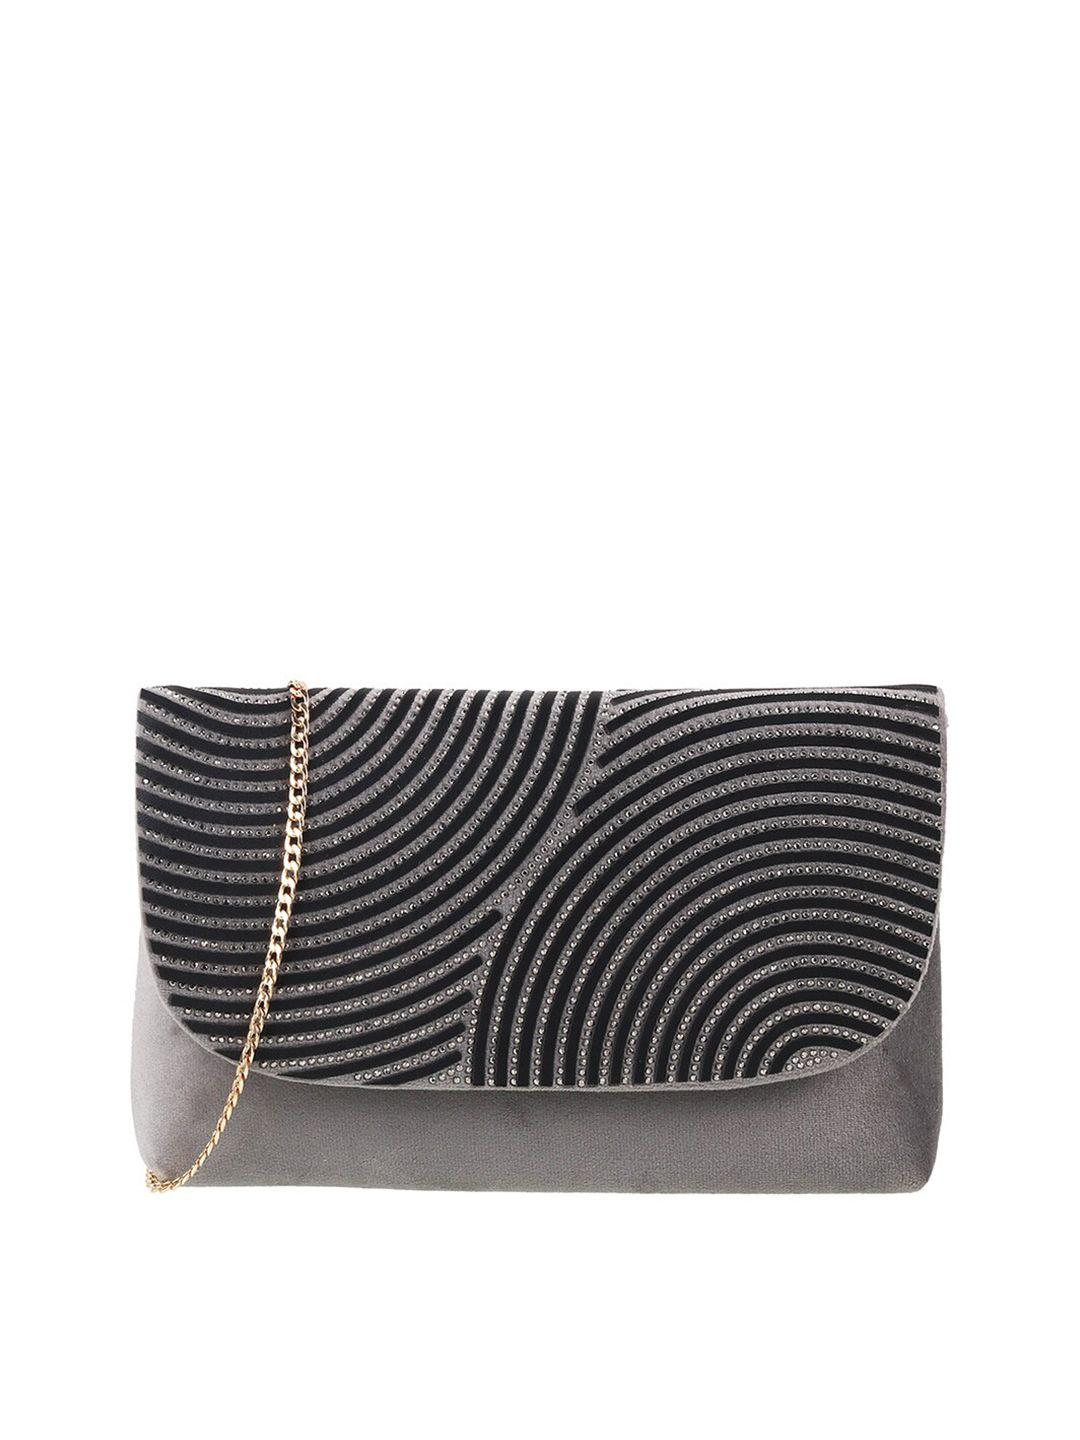 metro grey embellished purse clutch